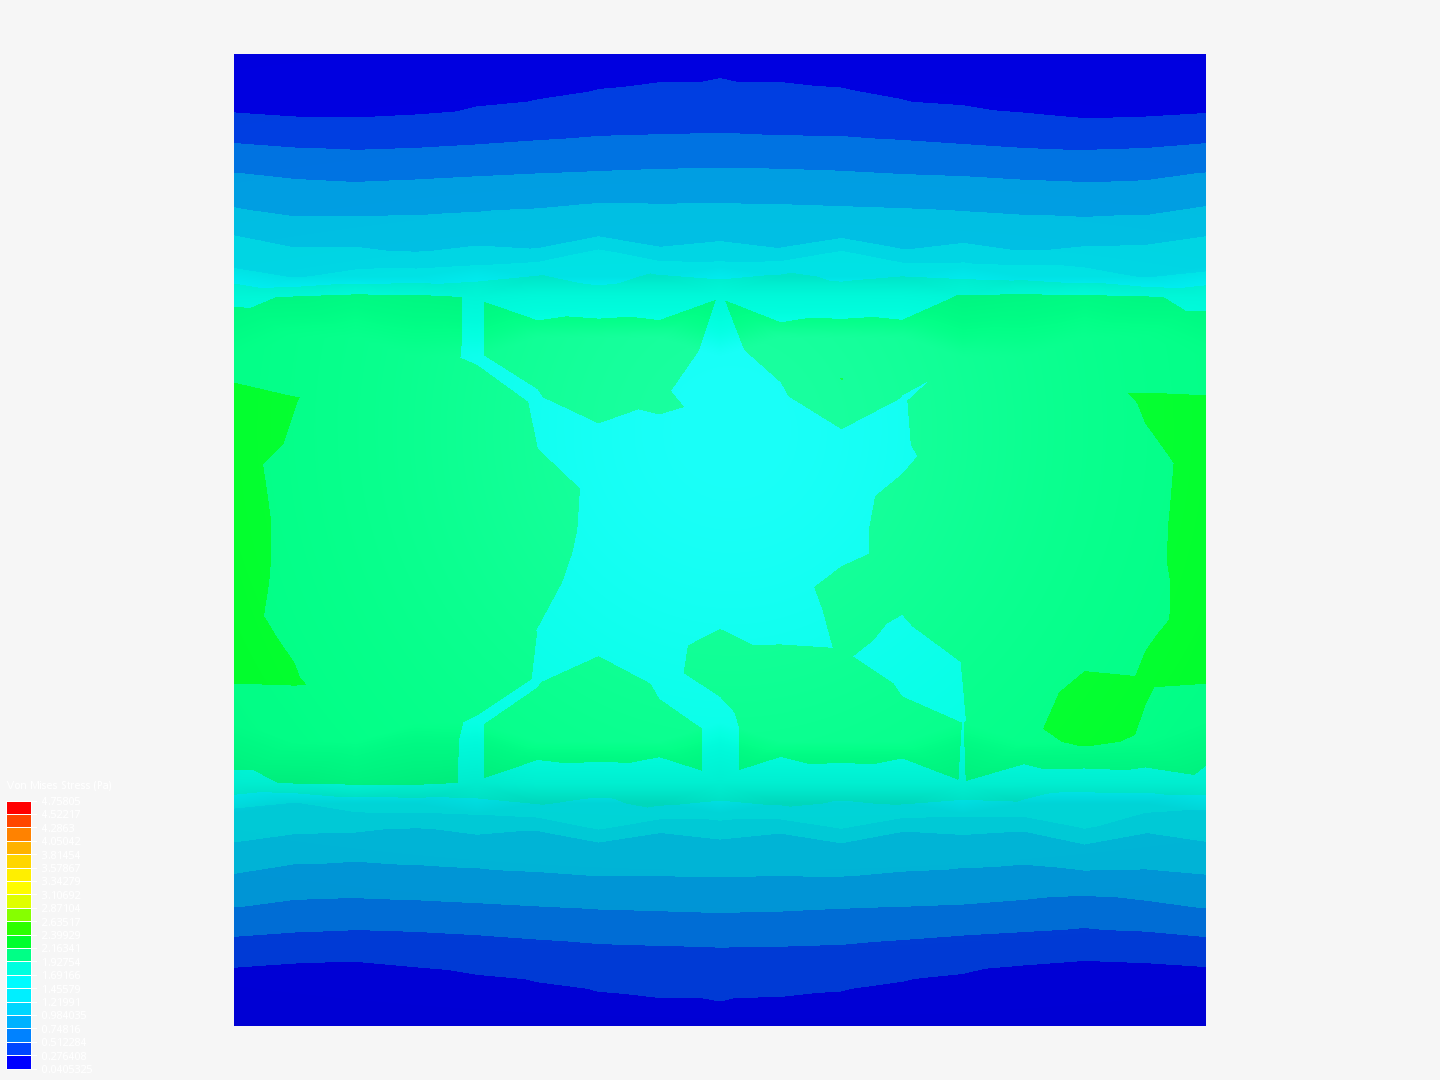 Hexagon compressive image